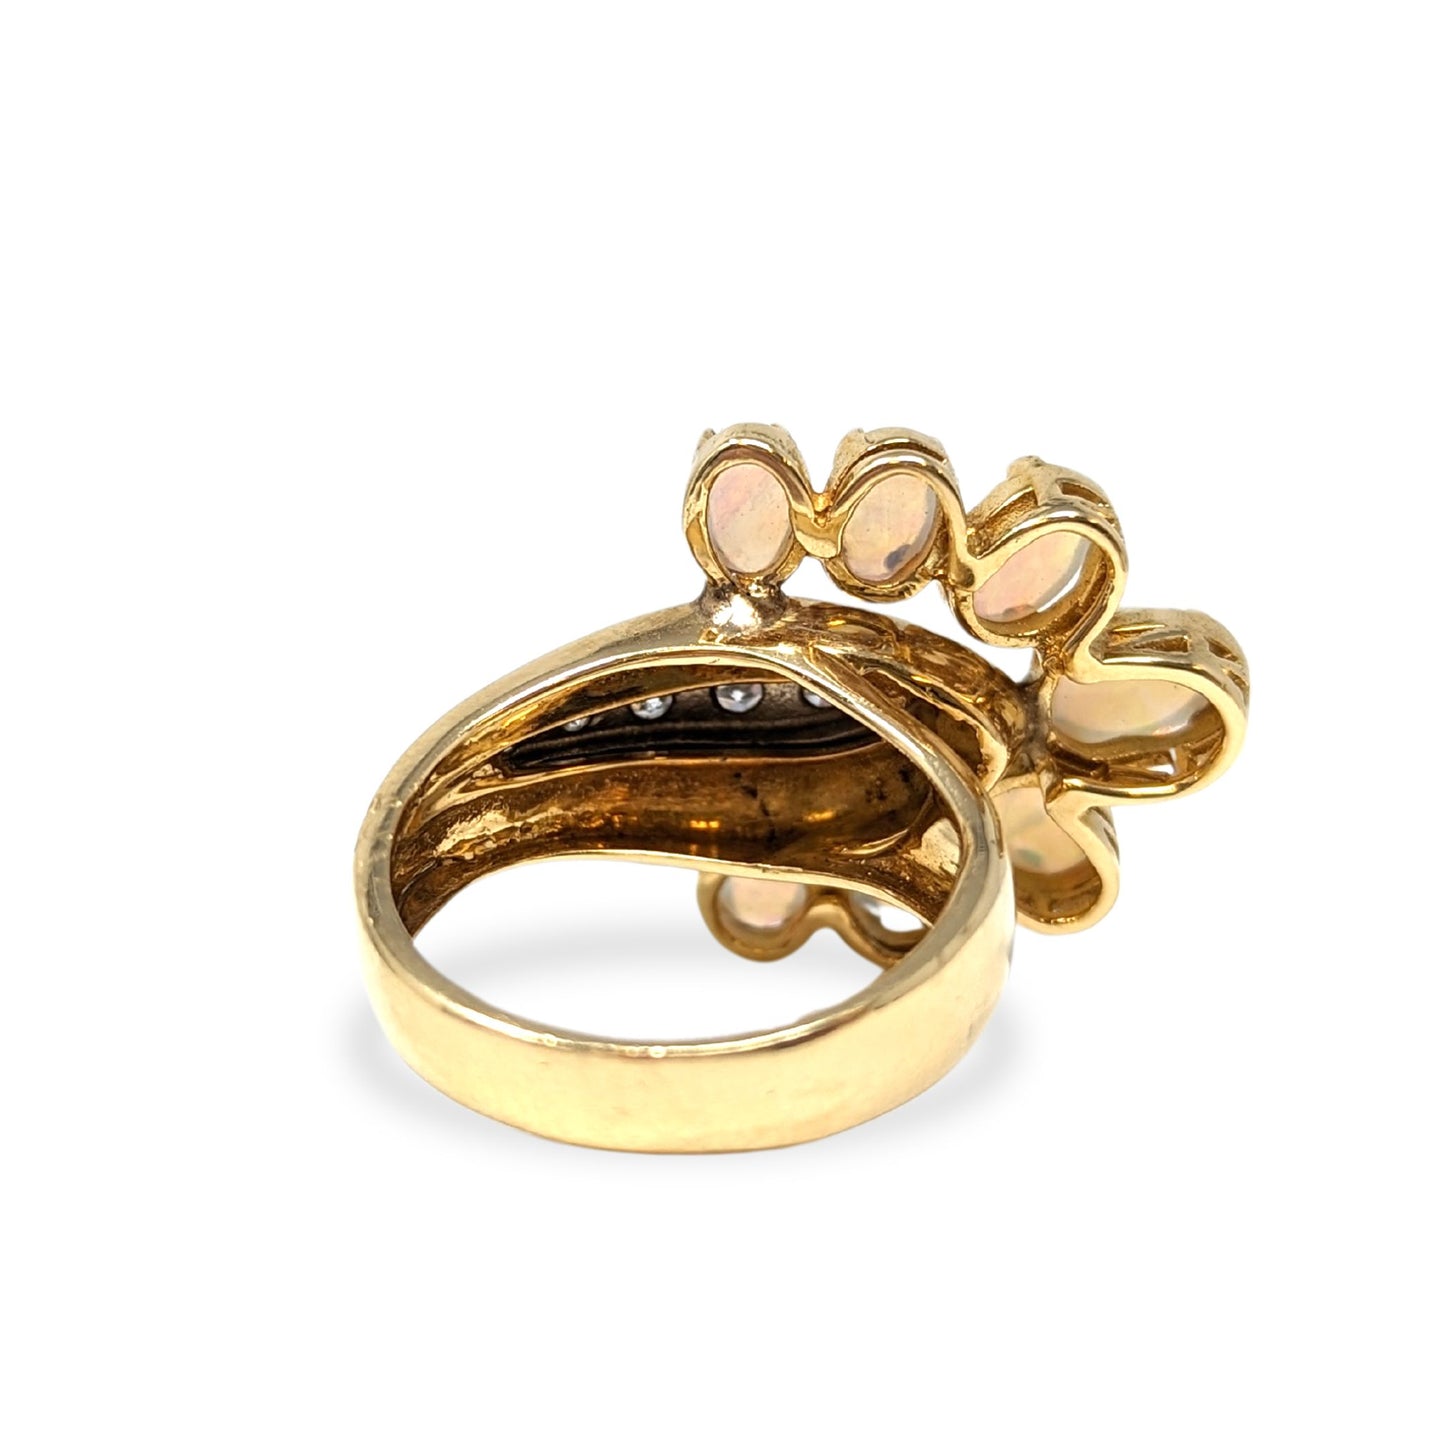 18K Gold Opal & Diamond Peacock Ring - Size 7